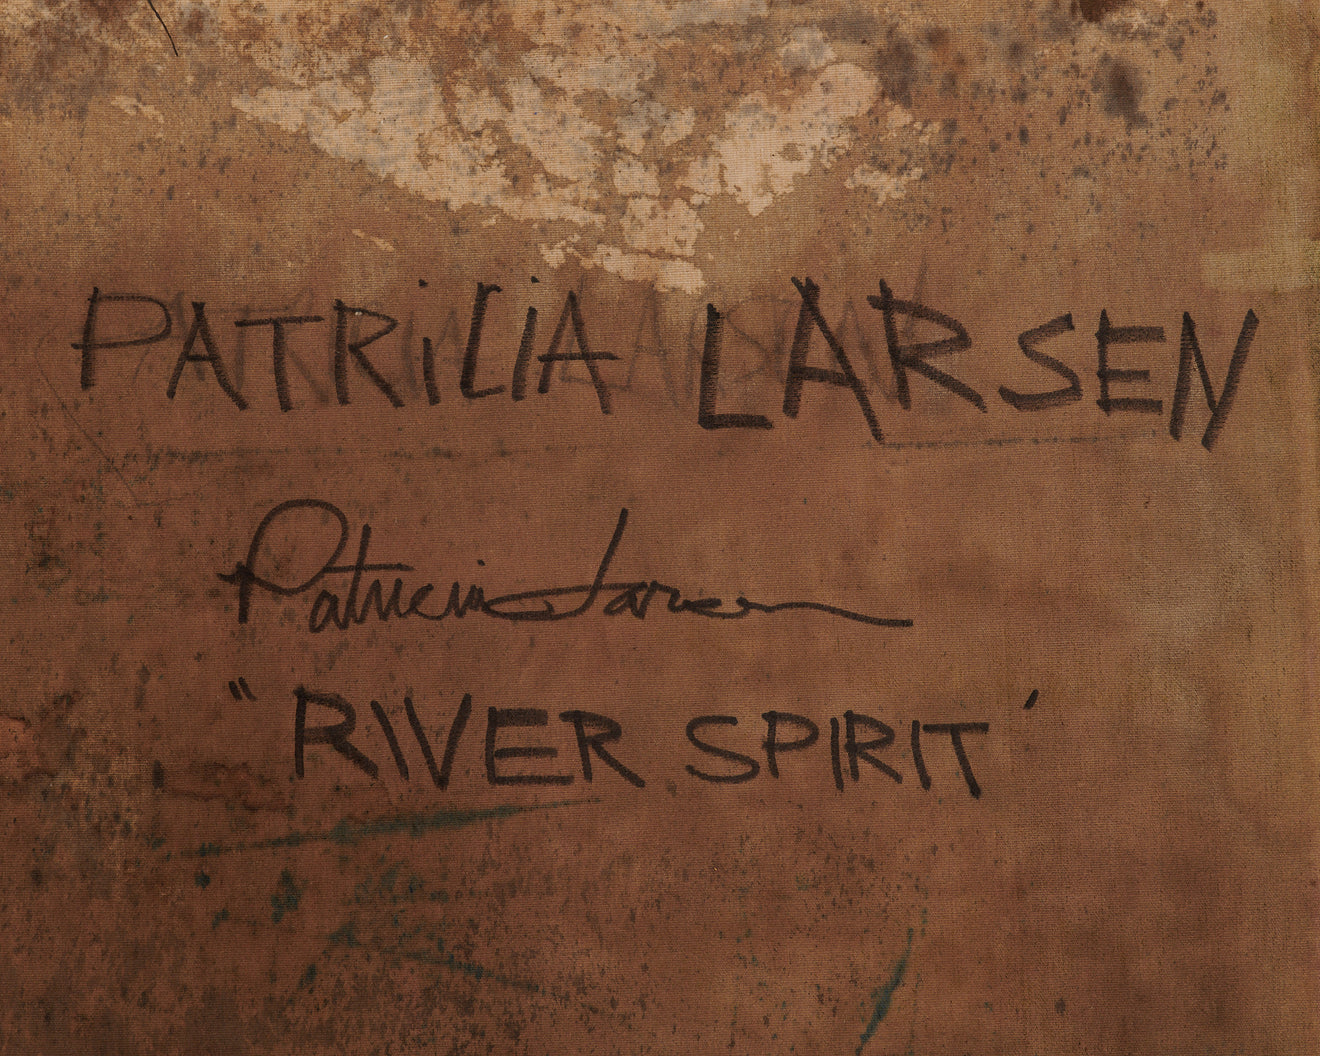 'RIVER SPIRIT' BY PATRICIA LARSEN